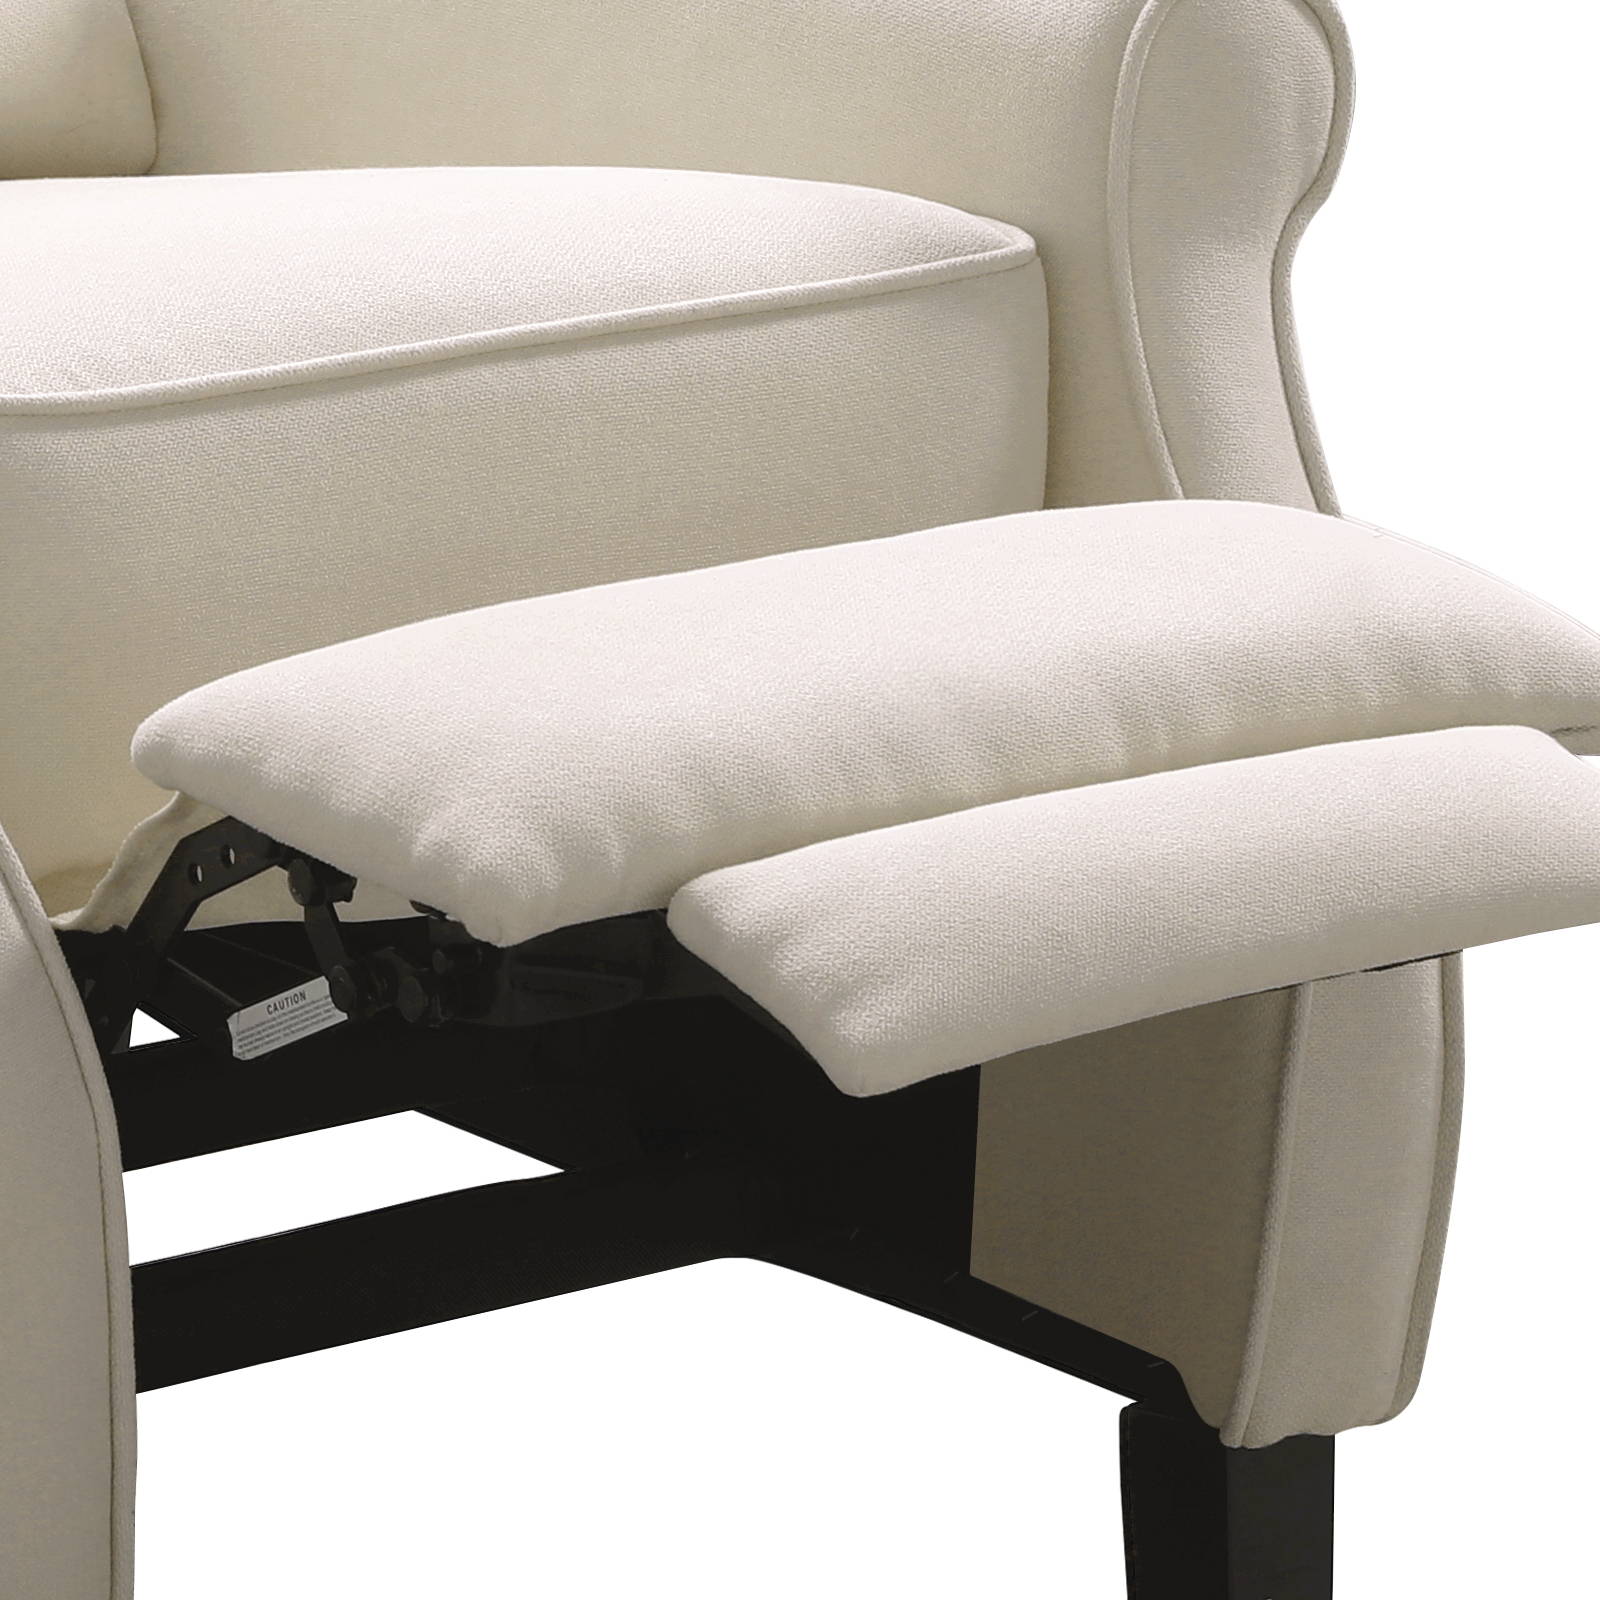 Asjmreye Wingback Recliner Chair,Heating and Vibrating Massage